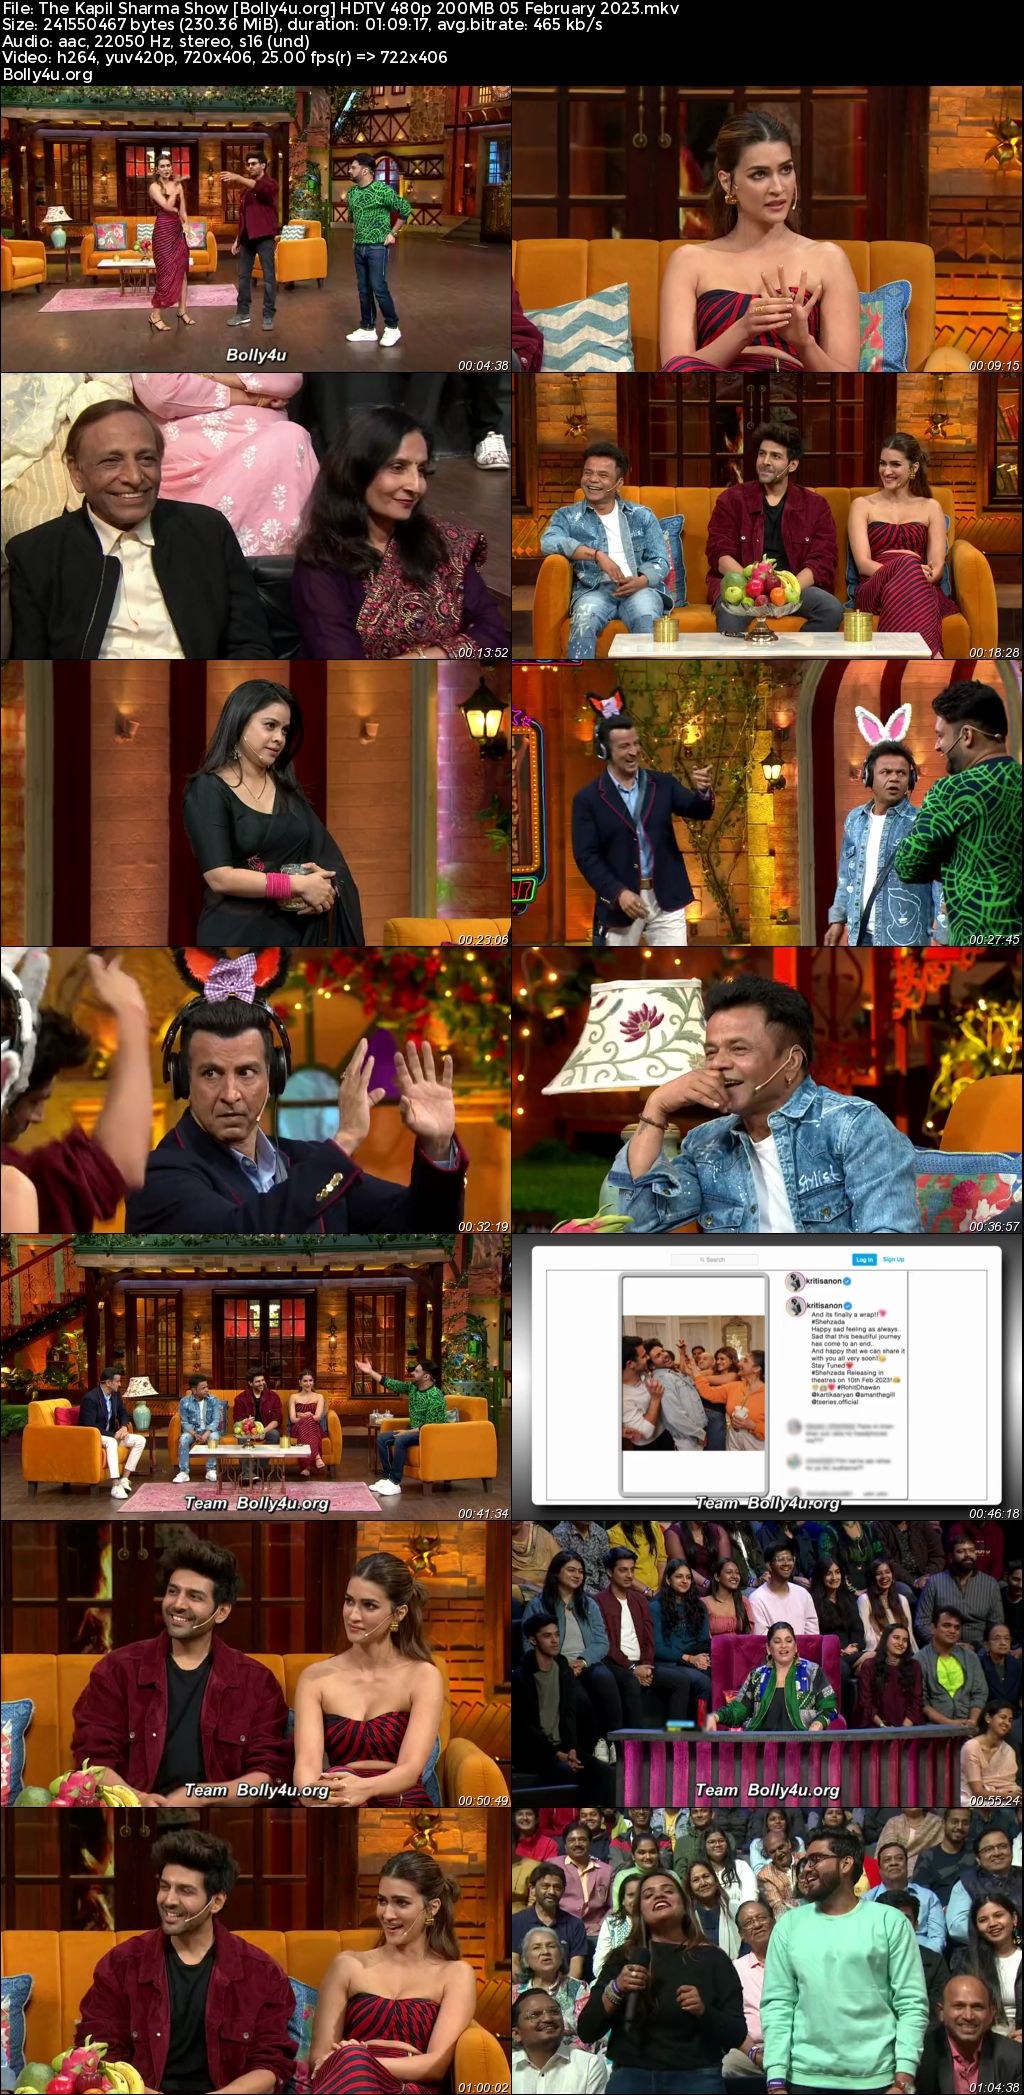 The Kapil Sharma Show HDTV 480p 200MB 05 February 2023 Download